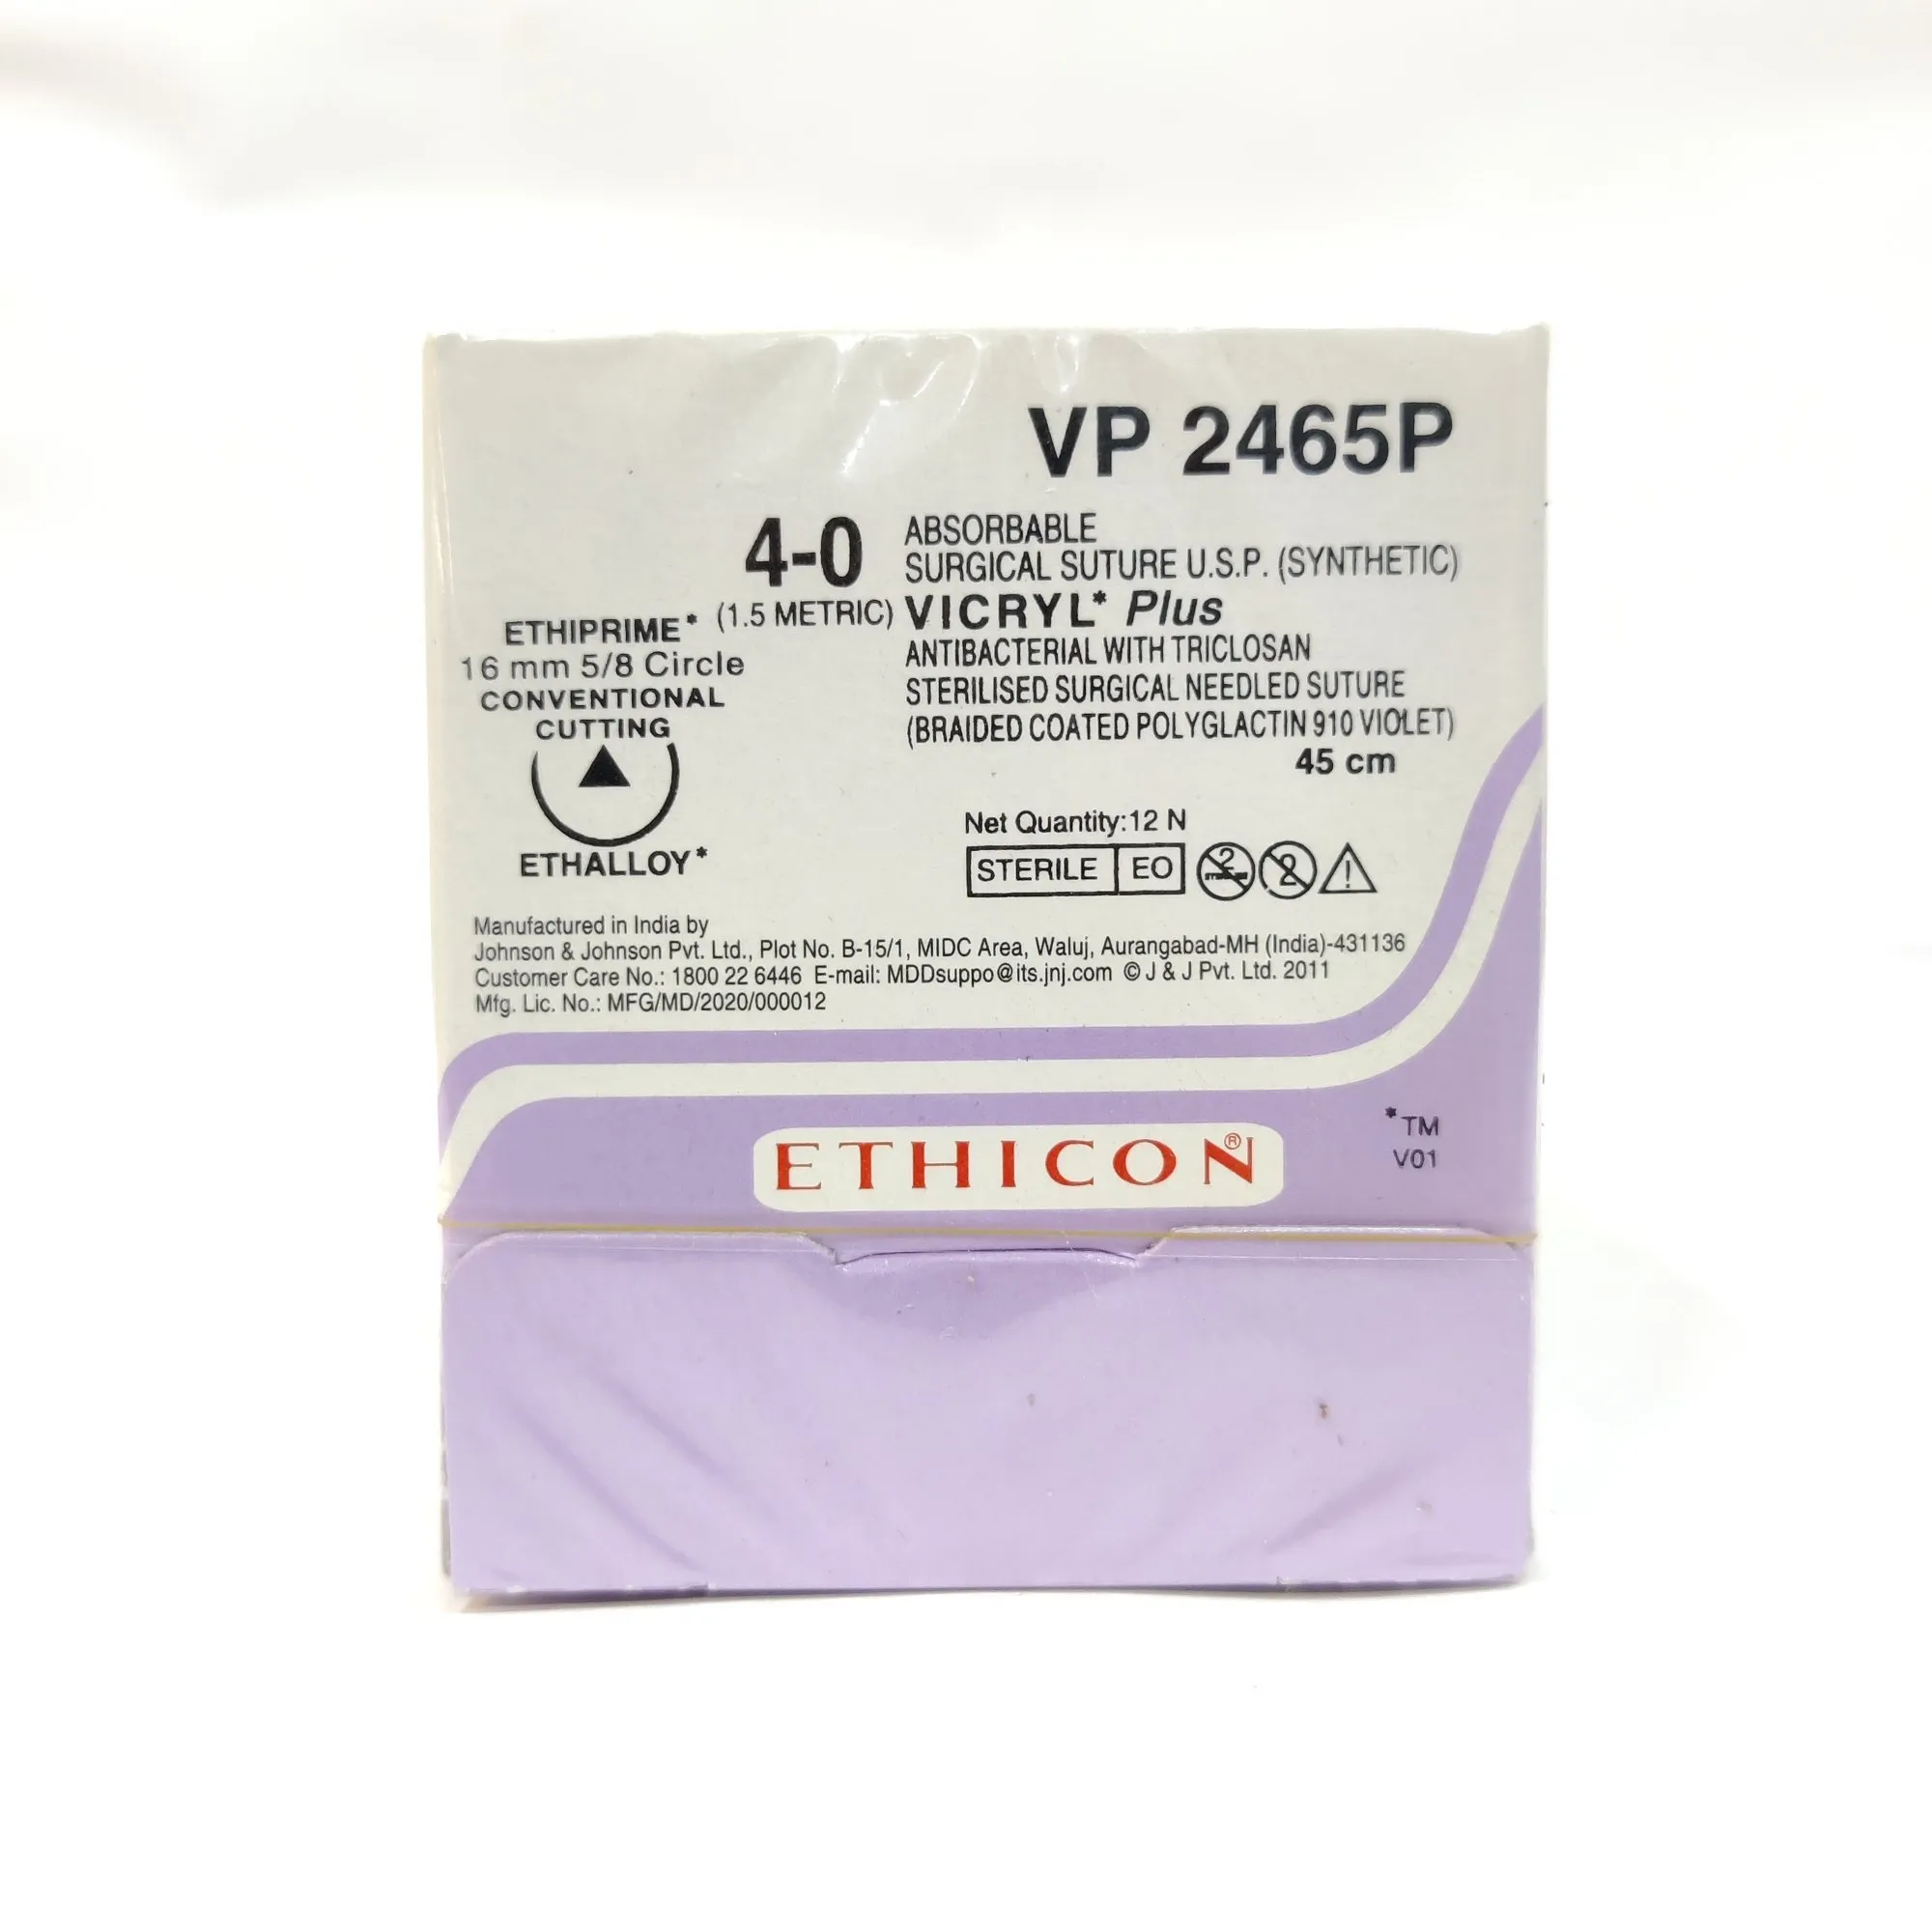 Ethicon Vicryl Plus Sutures USP 4-0, 5/8 Circle Cutting - VP 2465P